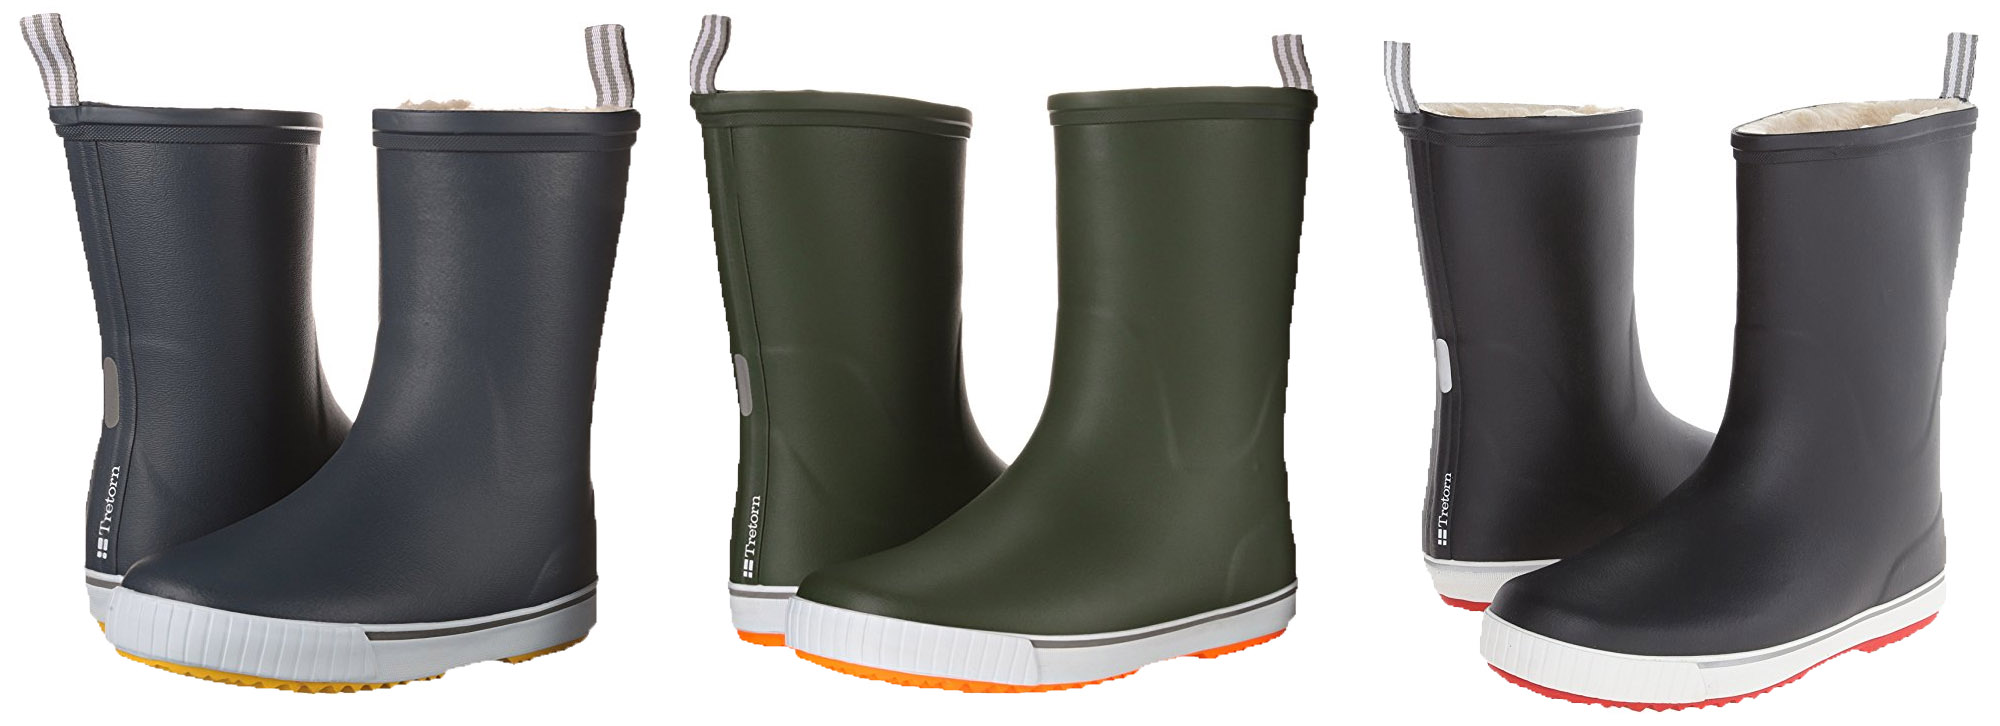 tretorn vinter rain boots